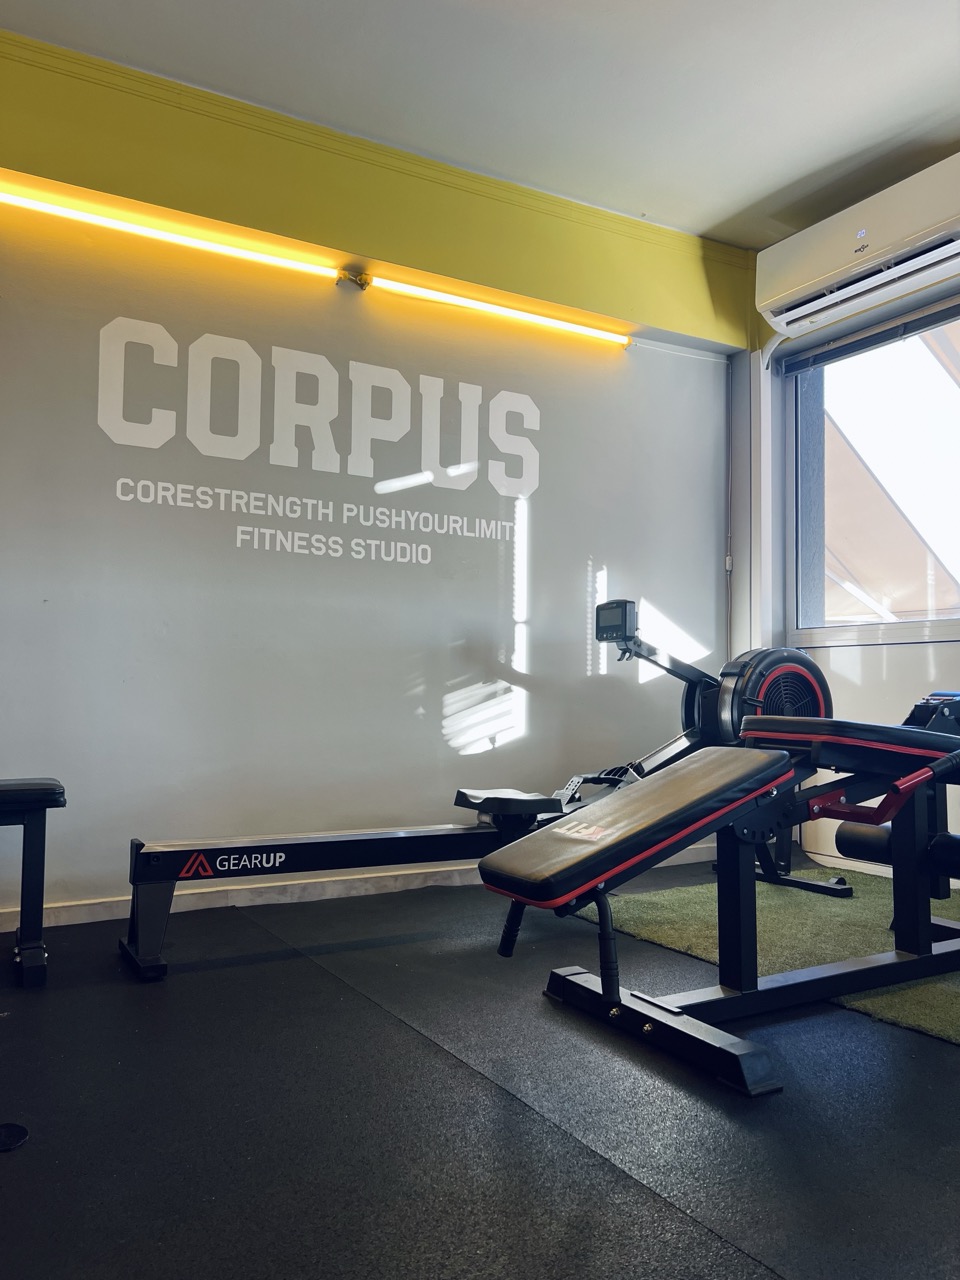 corpus-fitness-studio-personal-and-small-group-training-vrilissia-sportshunter-12 Large